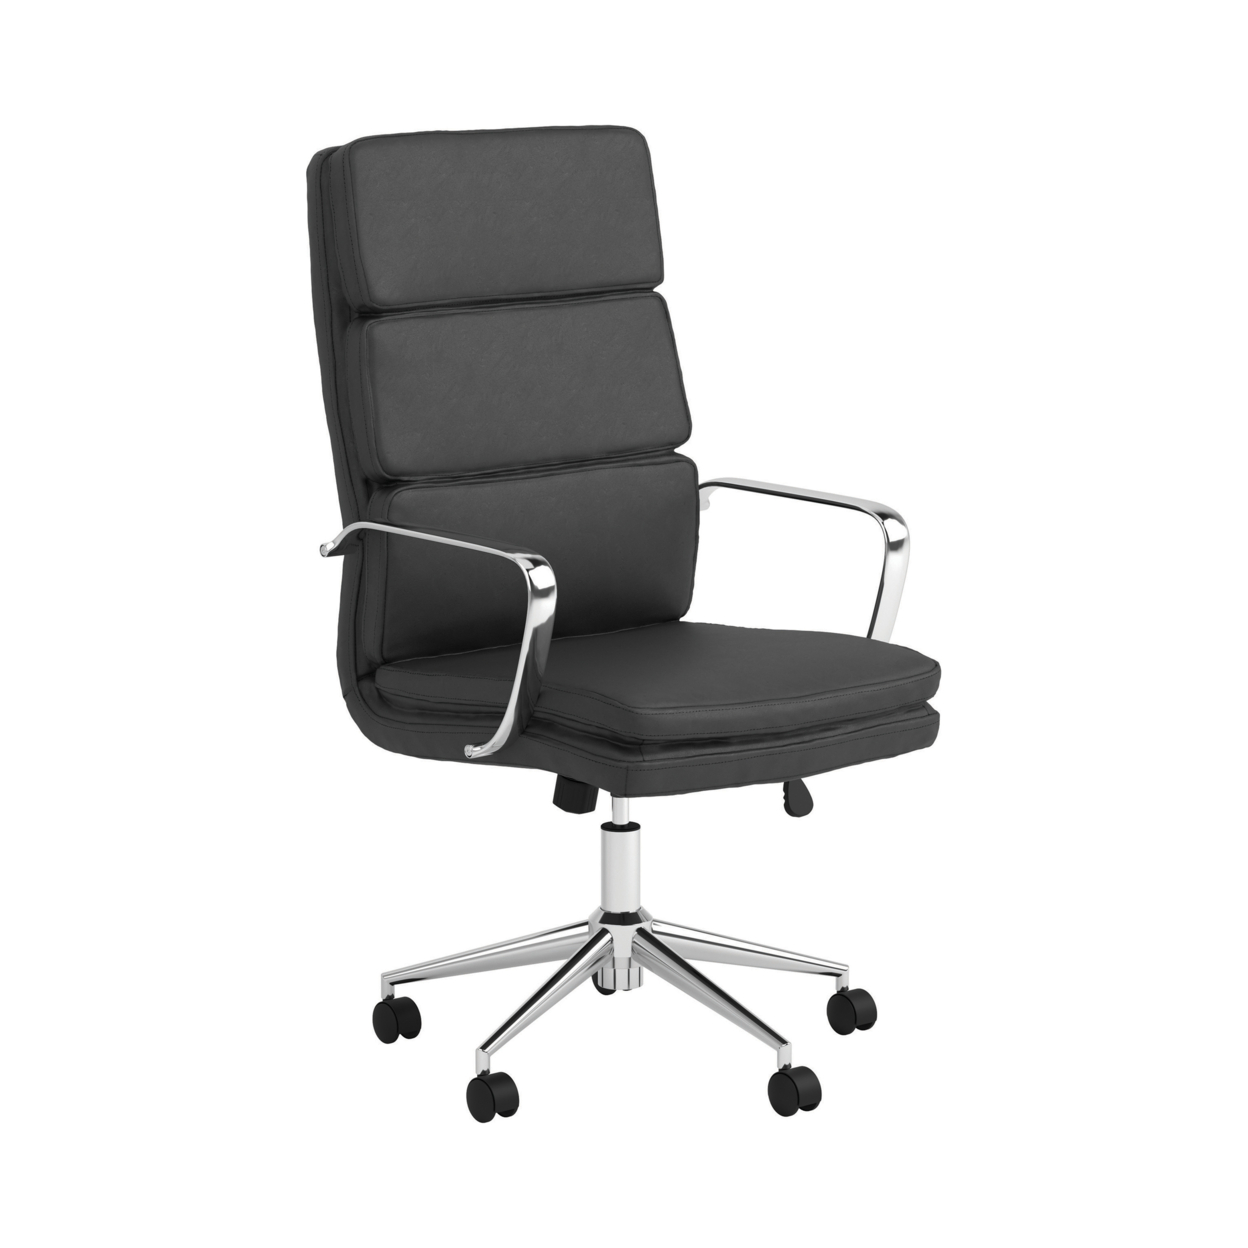 Horizontal Stitched Adjustable Leatherette Office Chair, Black And Chrome- Saltoro Sherpi